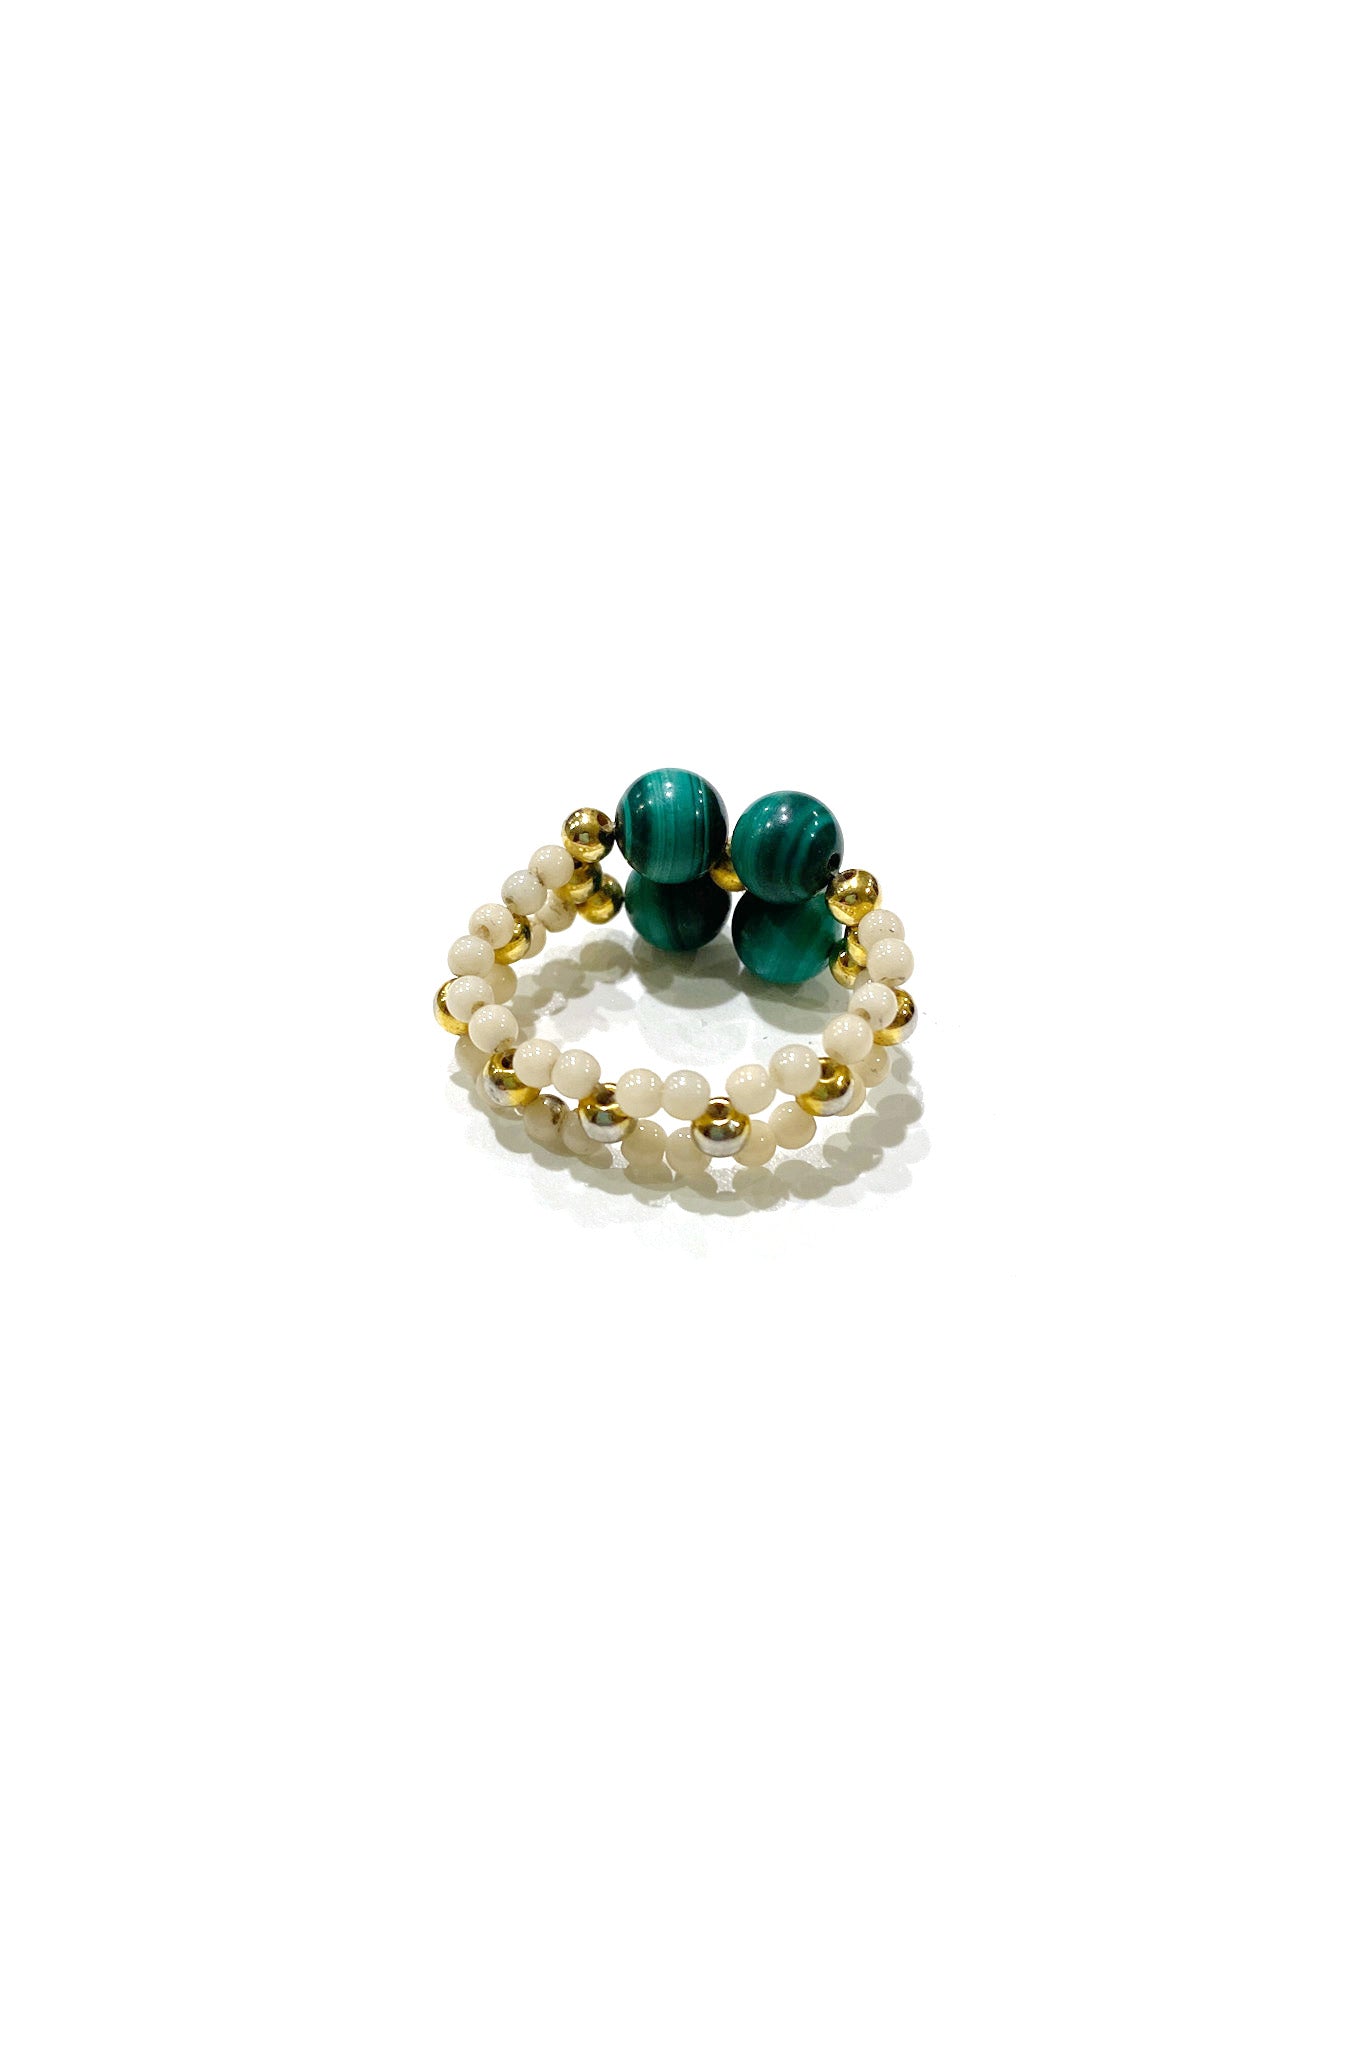 Vintage beads ring 緑の花園